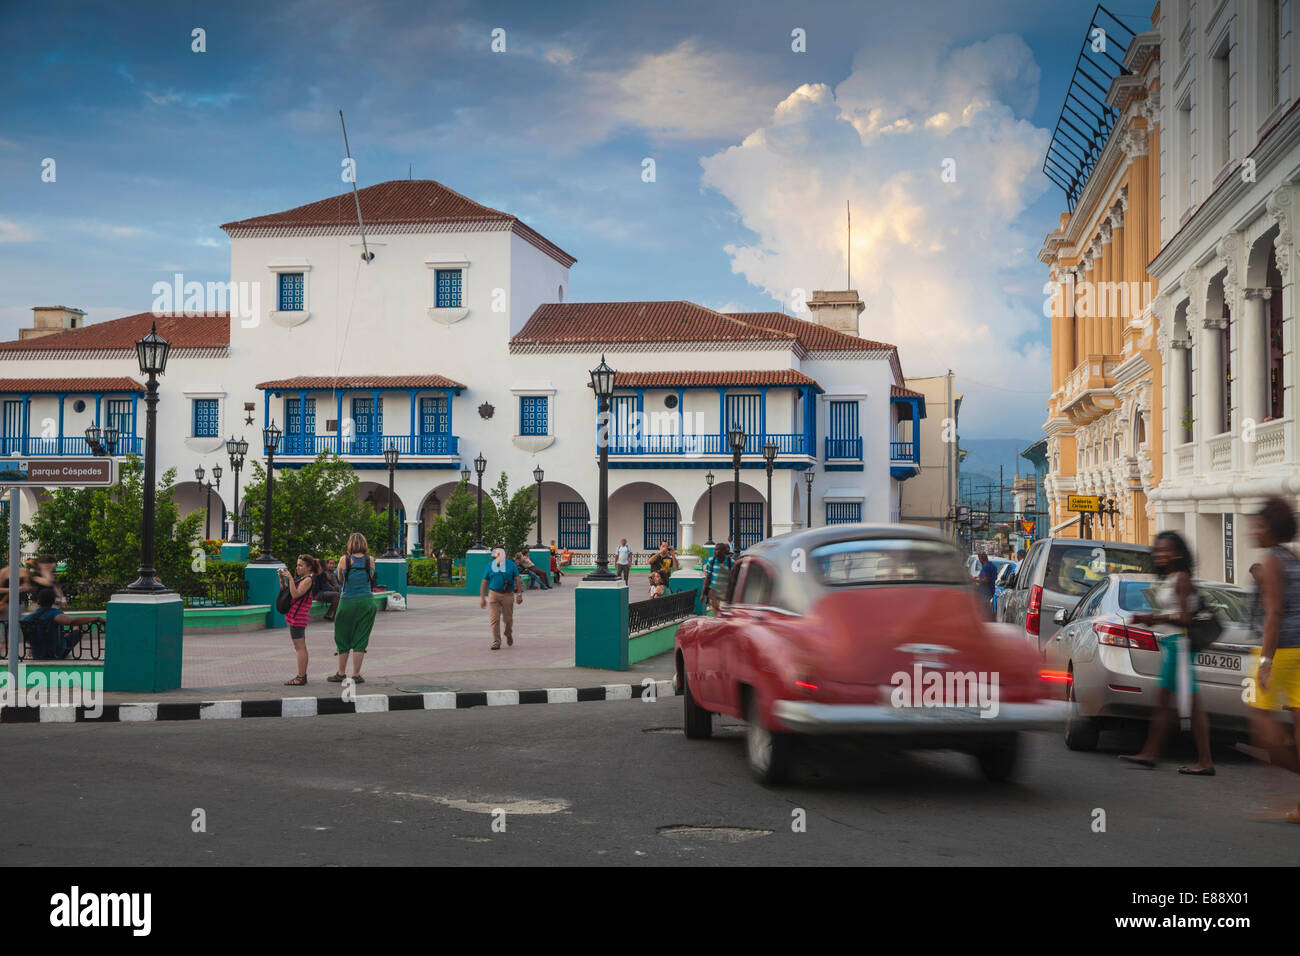 Parque Cespedes looking towards the town hall and Governor's House, Santiago de Cuba, Cuba, West Indies, Caribbean Stock Photo